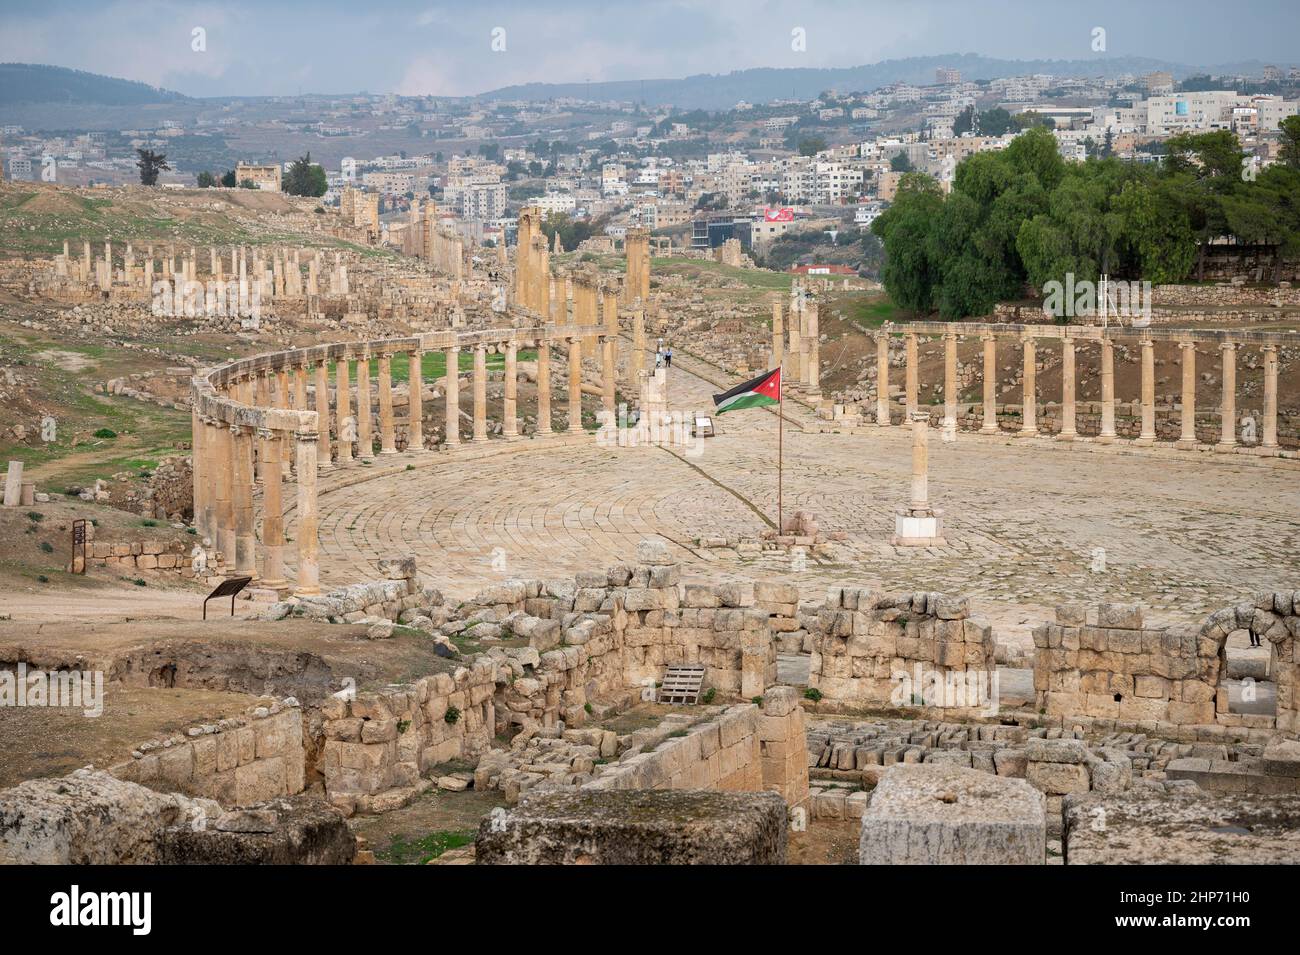 Oval Plaza in the ancient Roman city of Jerash, Jordan Stock Photo